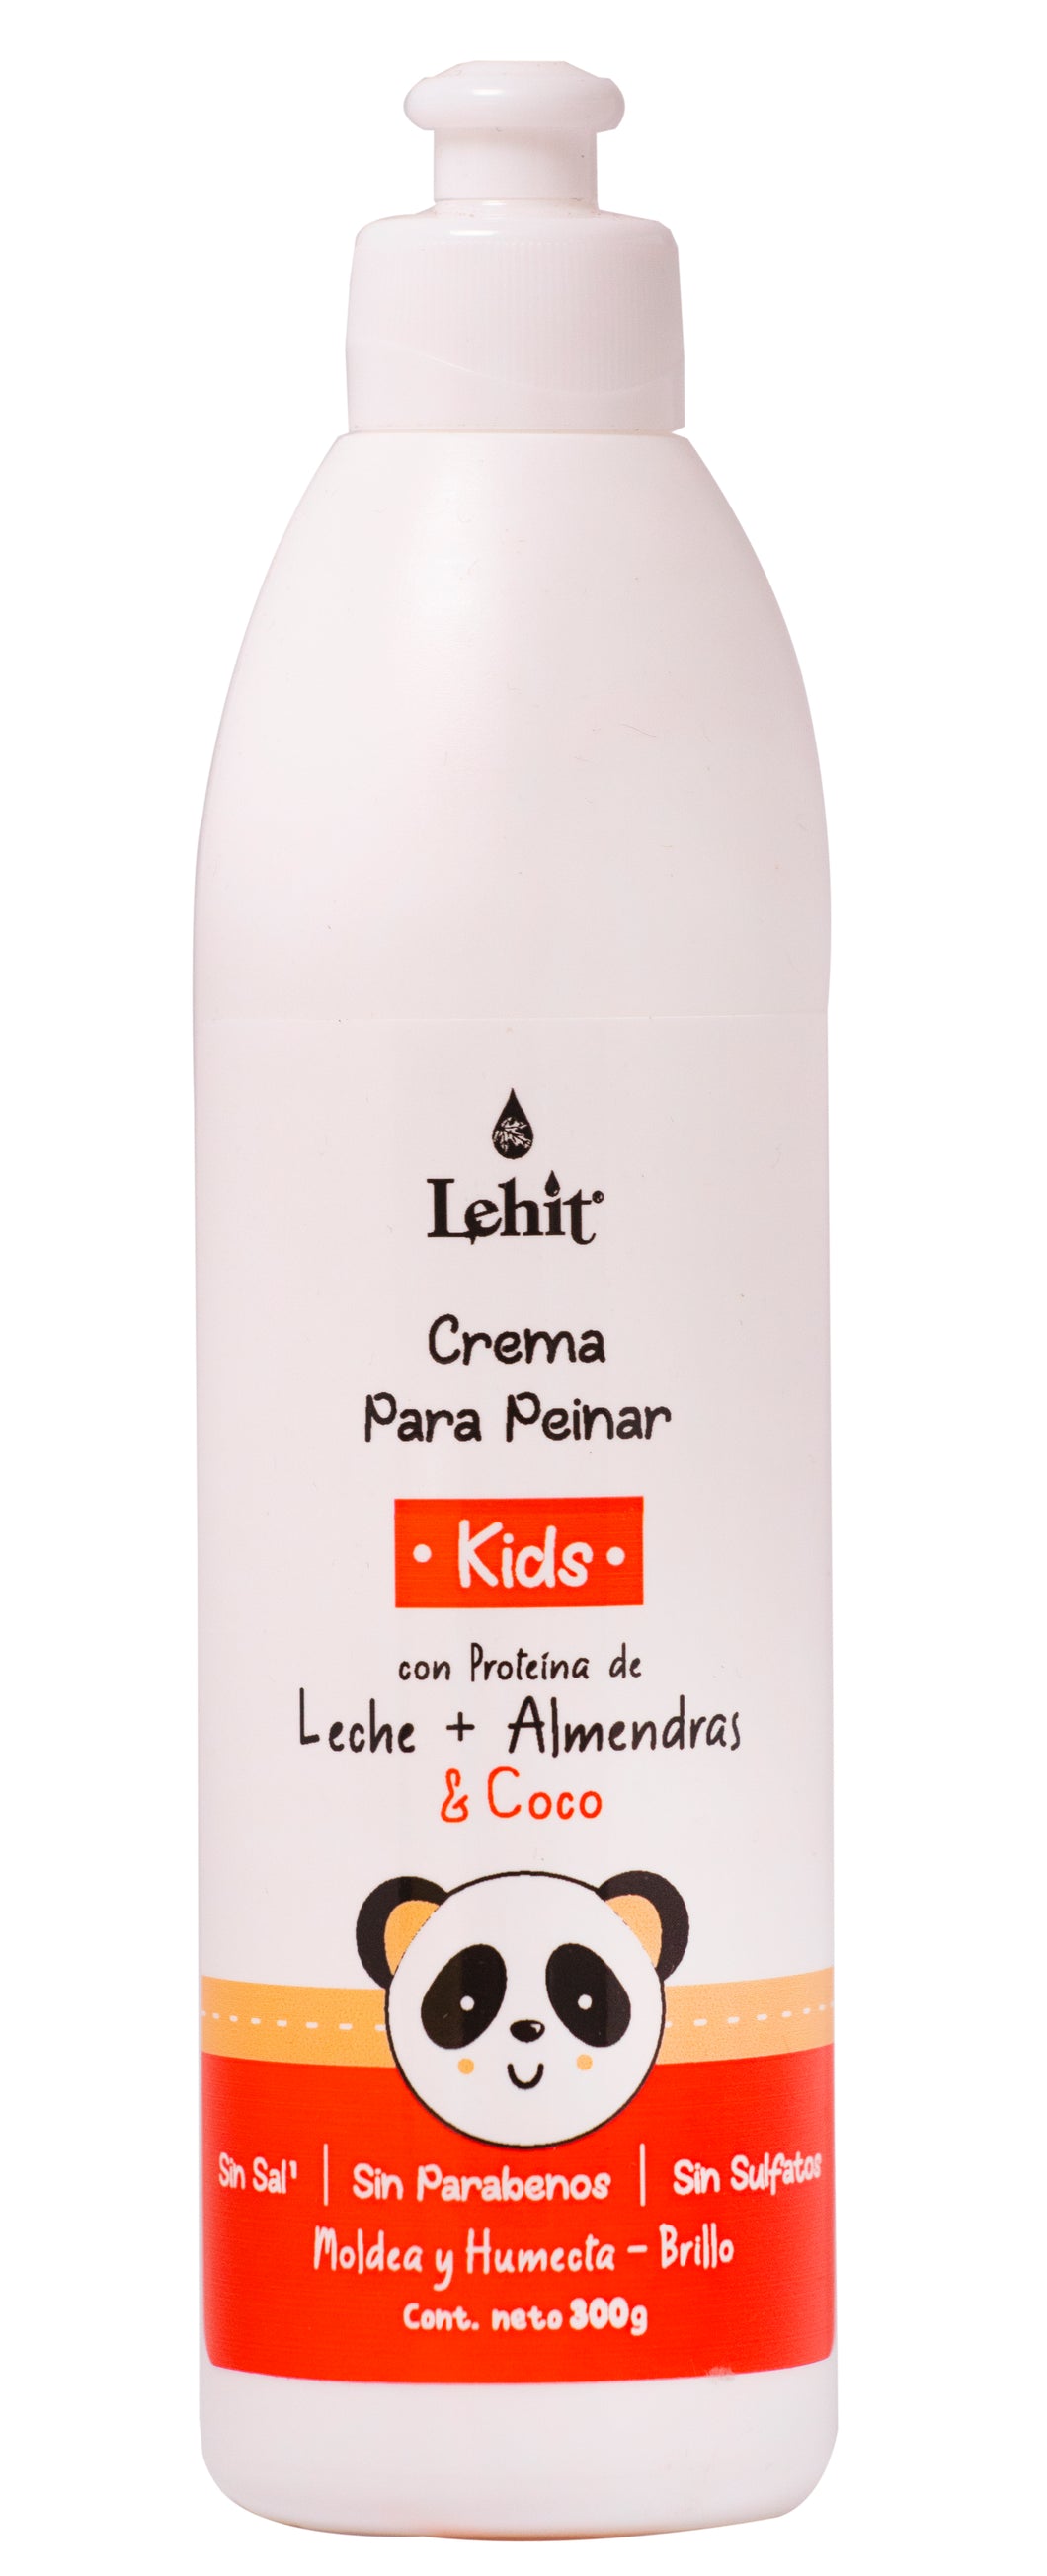 Crema para Peinar Kids para niñas y niños  Lehit